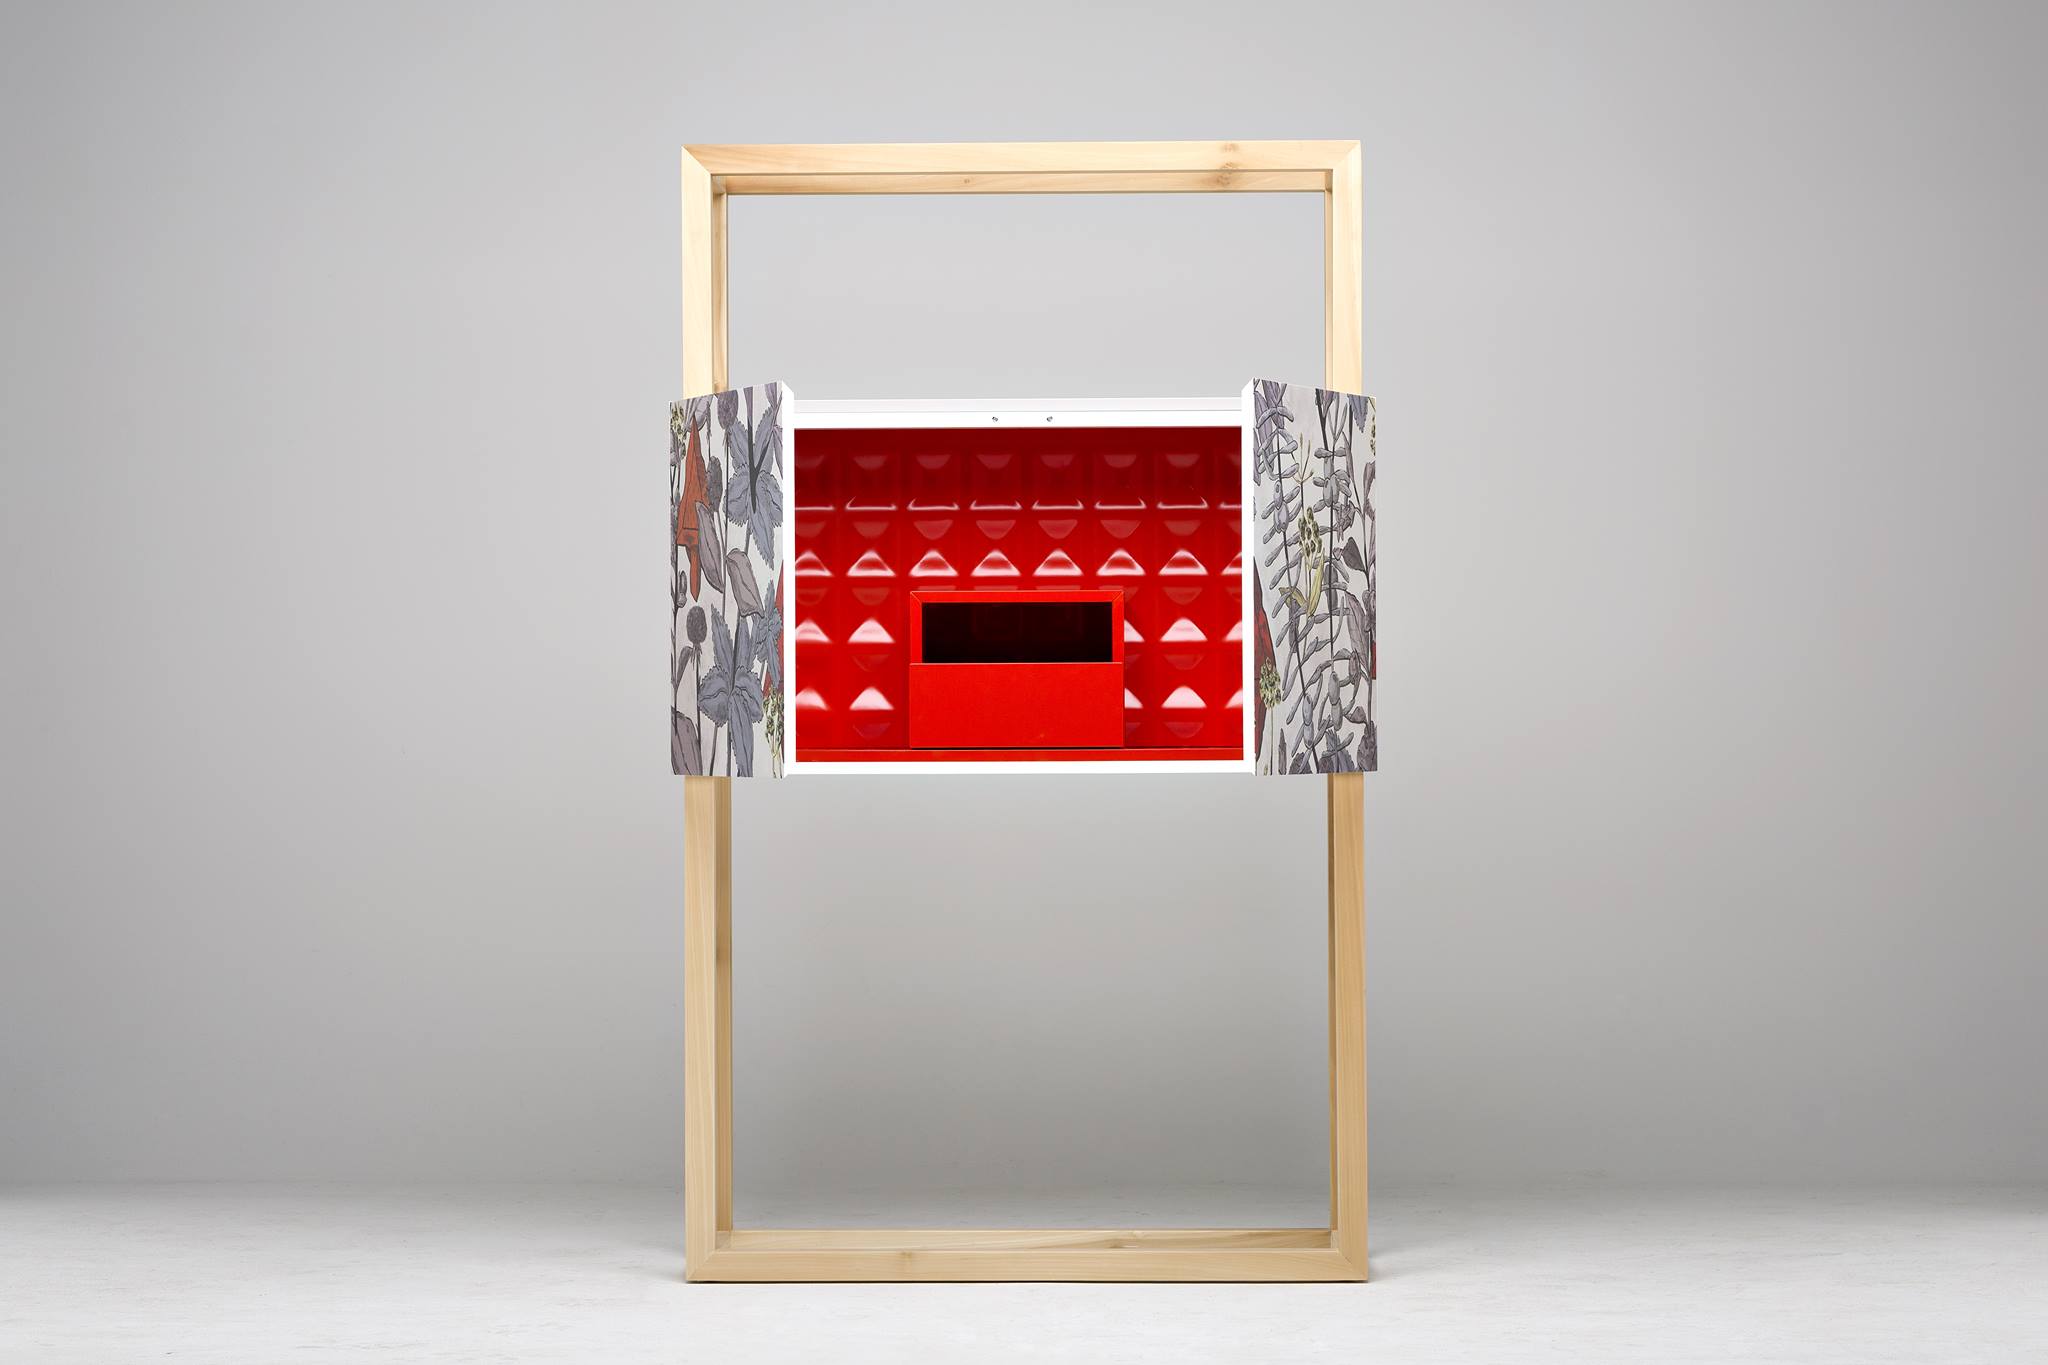 KINU console, by Paolo Bandiello at ART